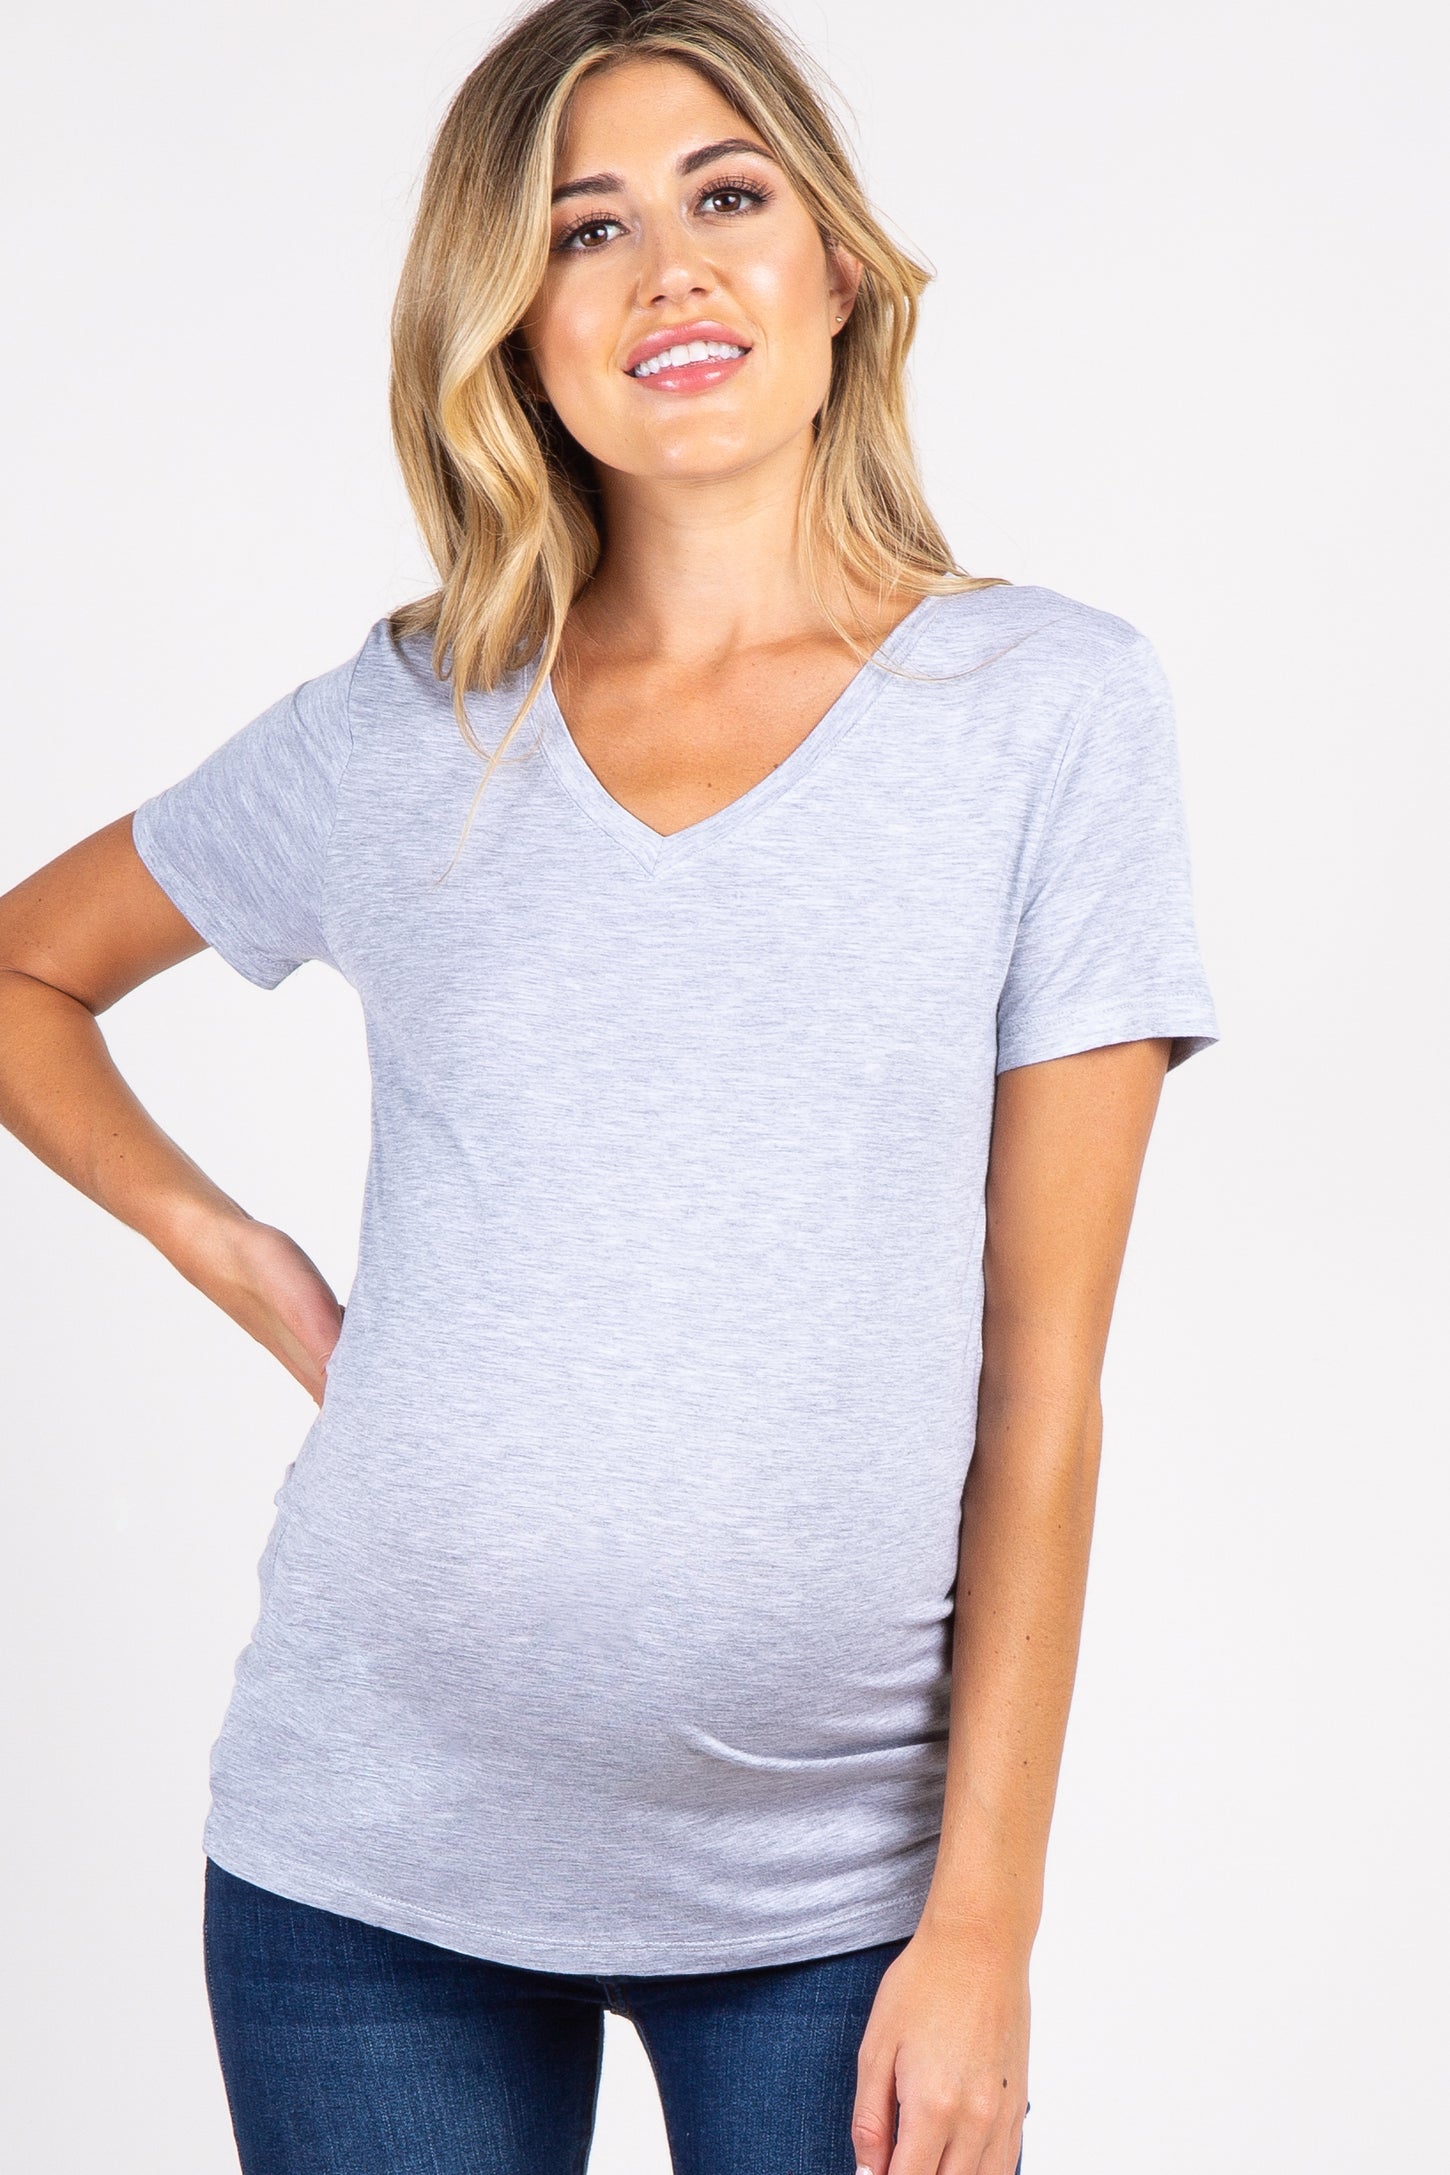 Heather Grey Basic V-Neck Maternity Top